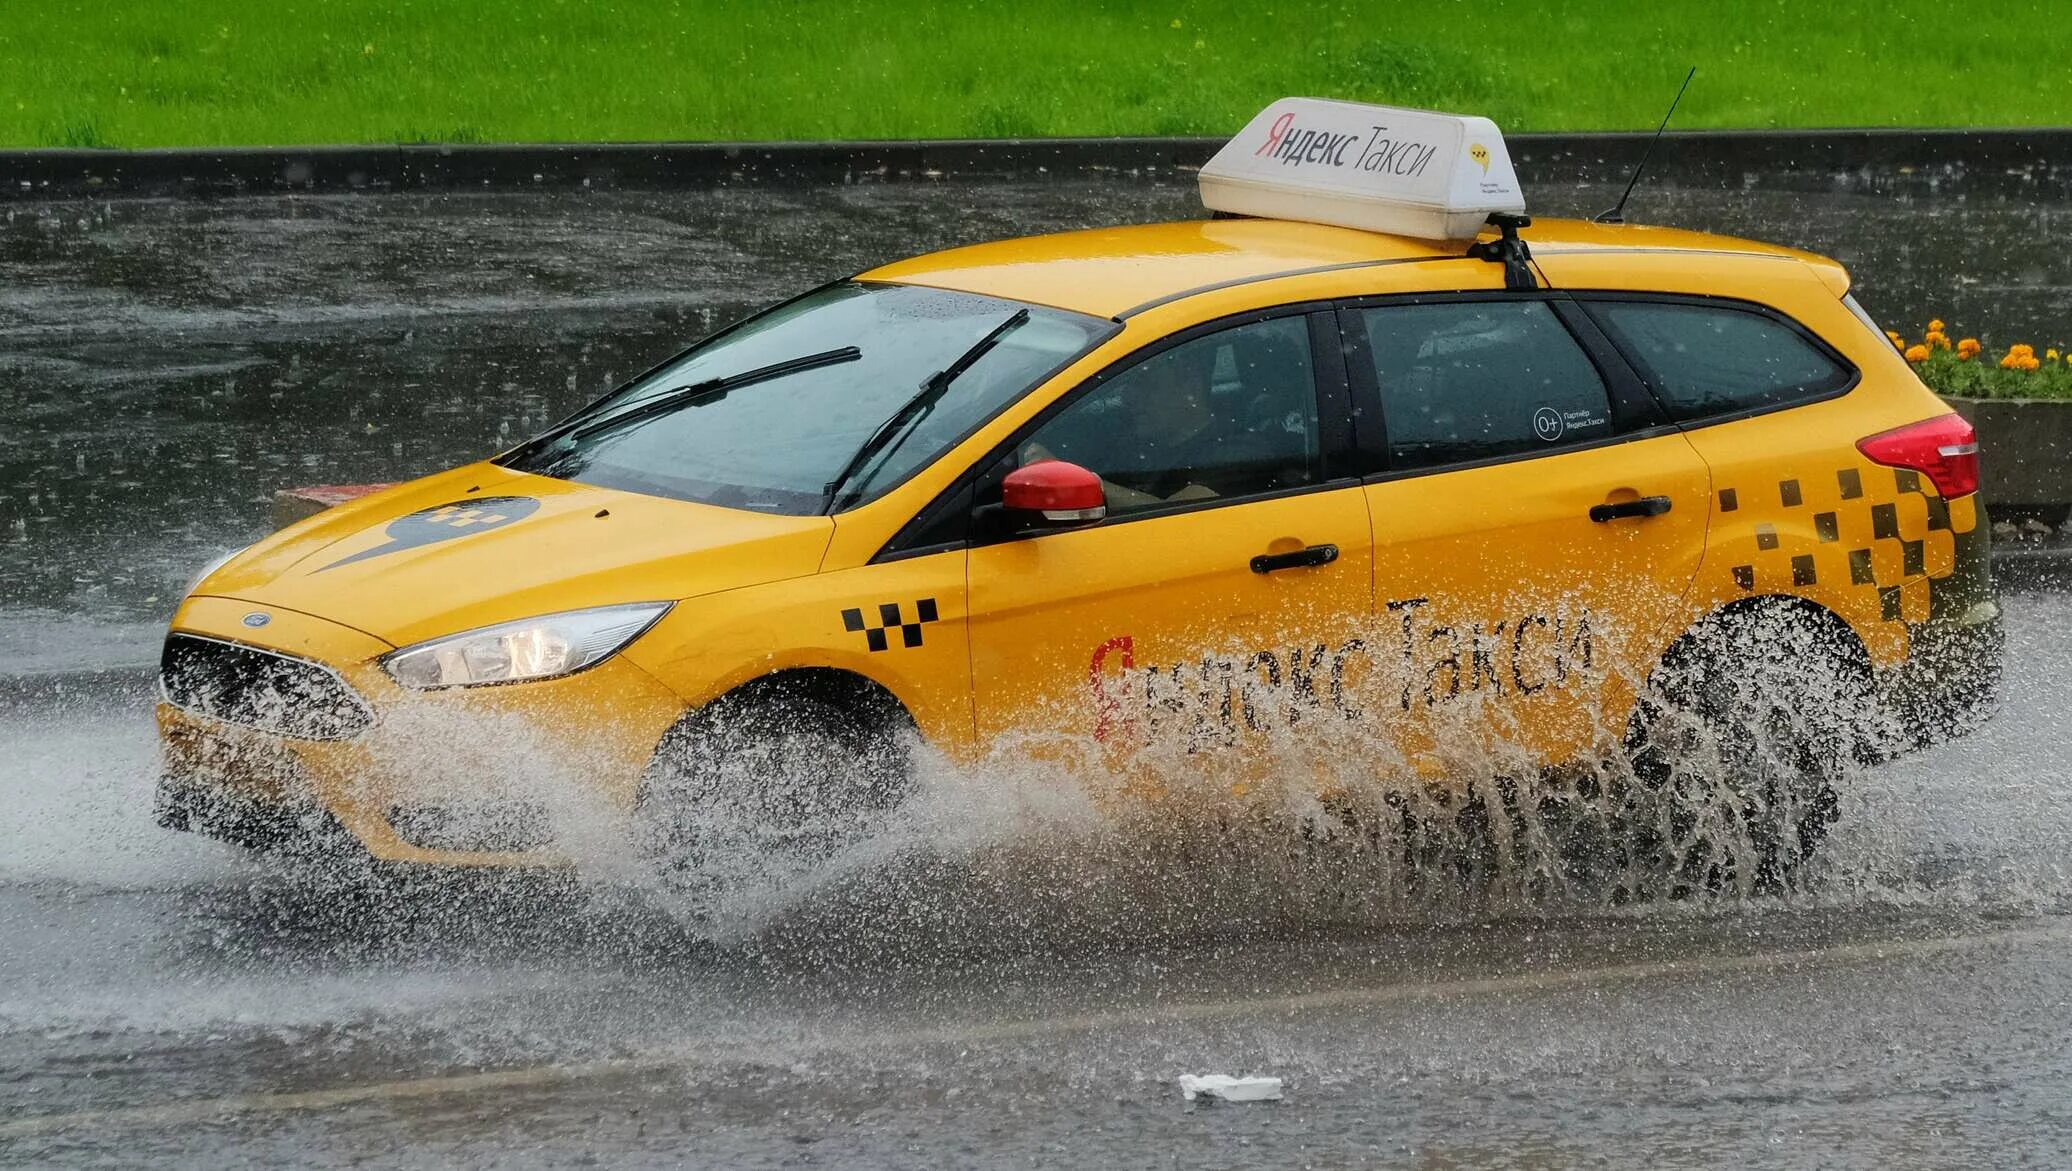 Машина "такси". Автомобиль «такси». Машина такси в дороге. Такси лето. Take car taxi